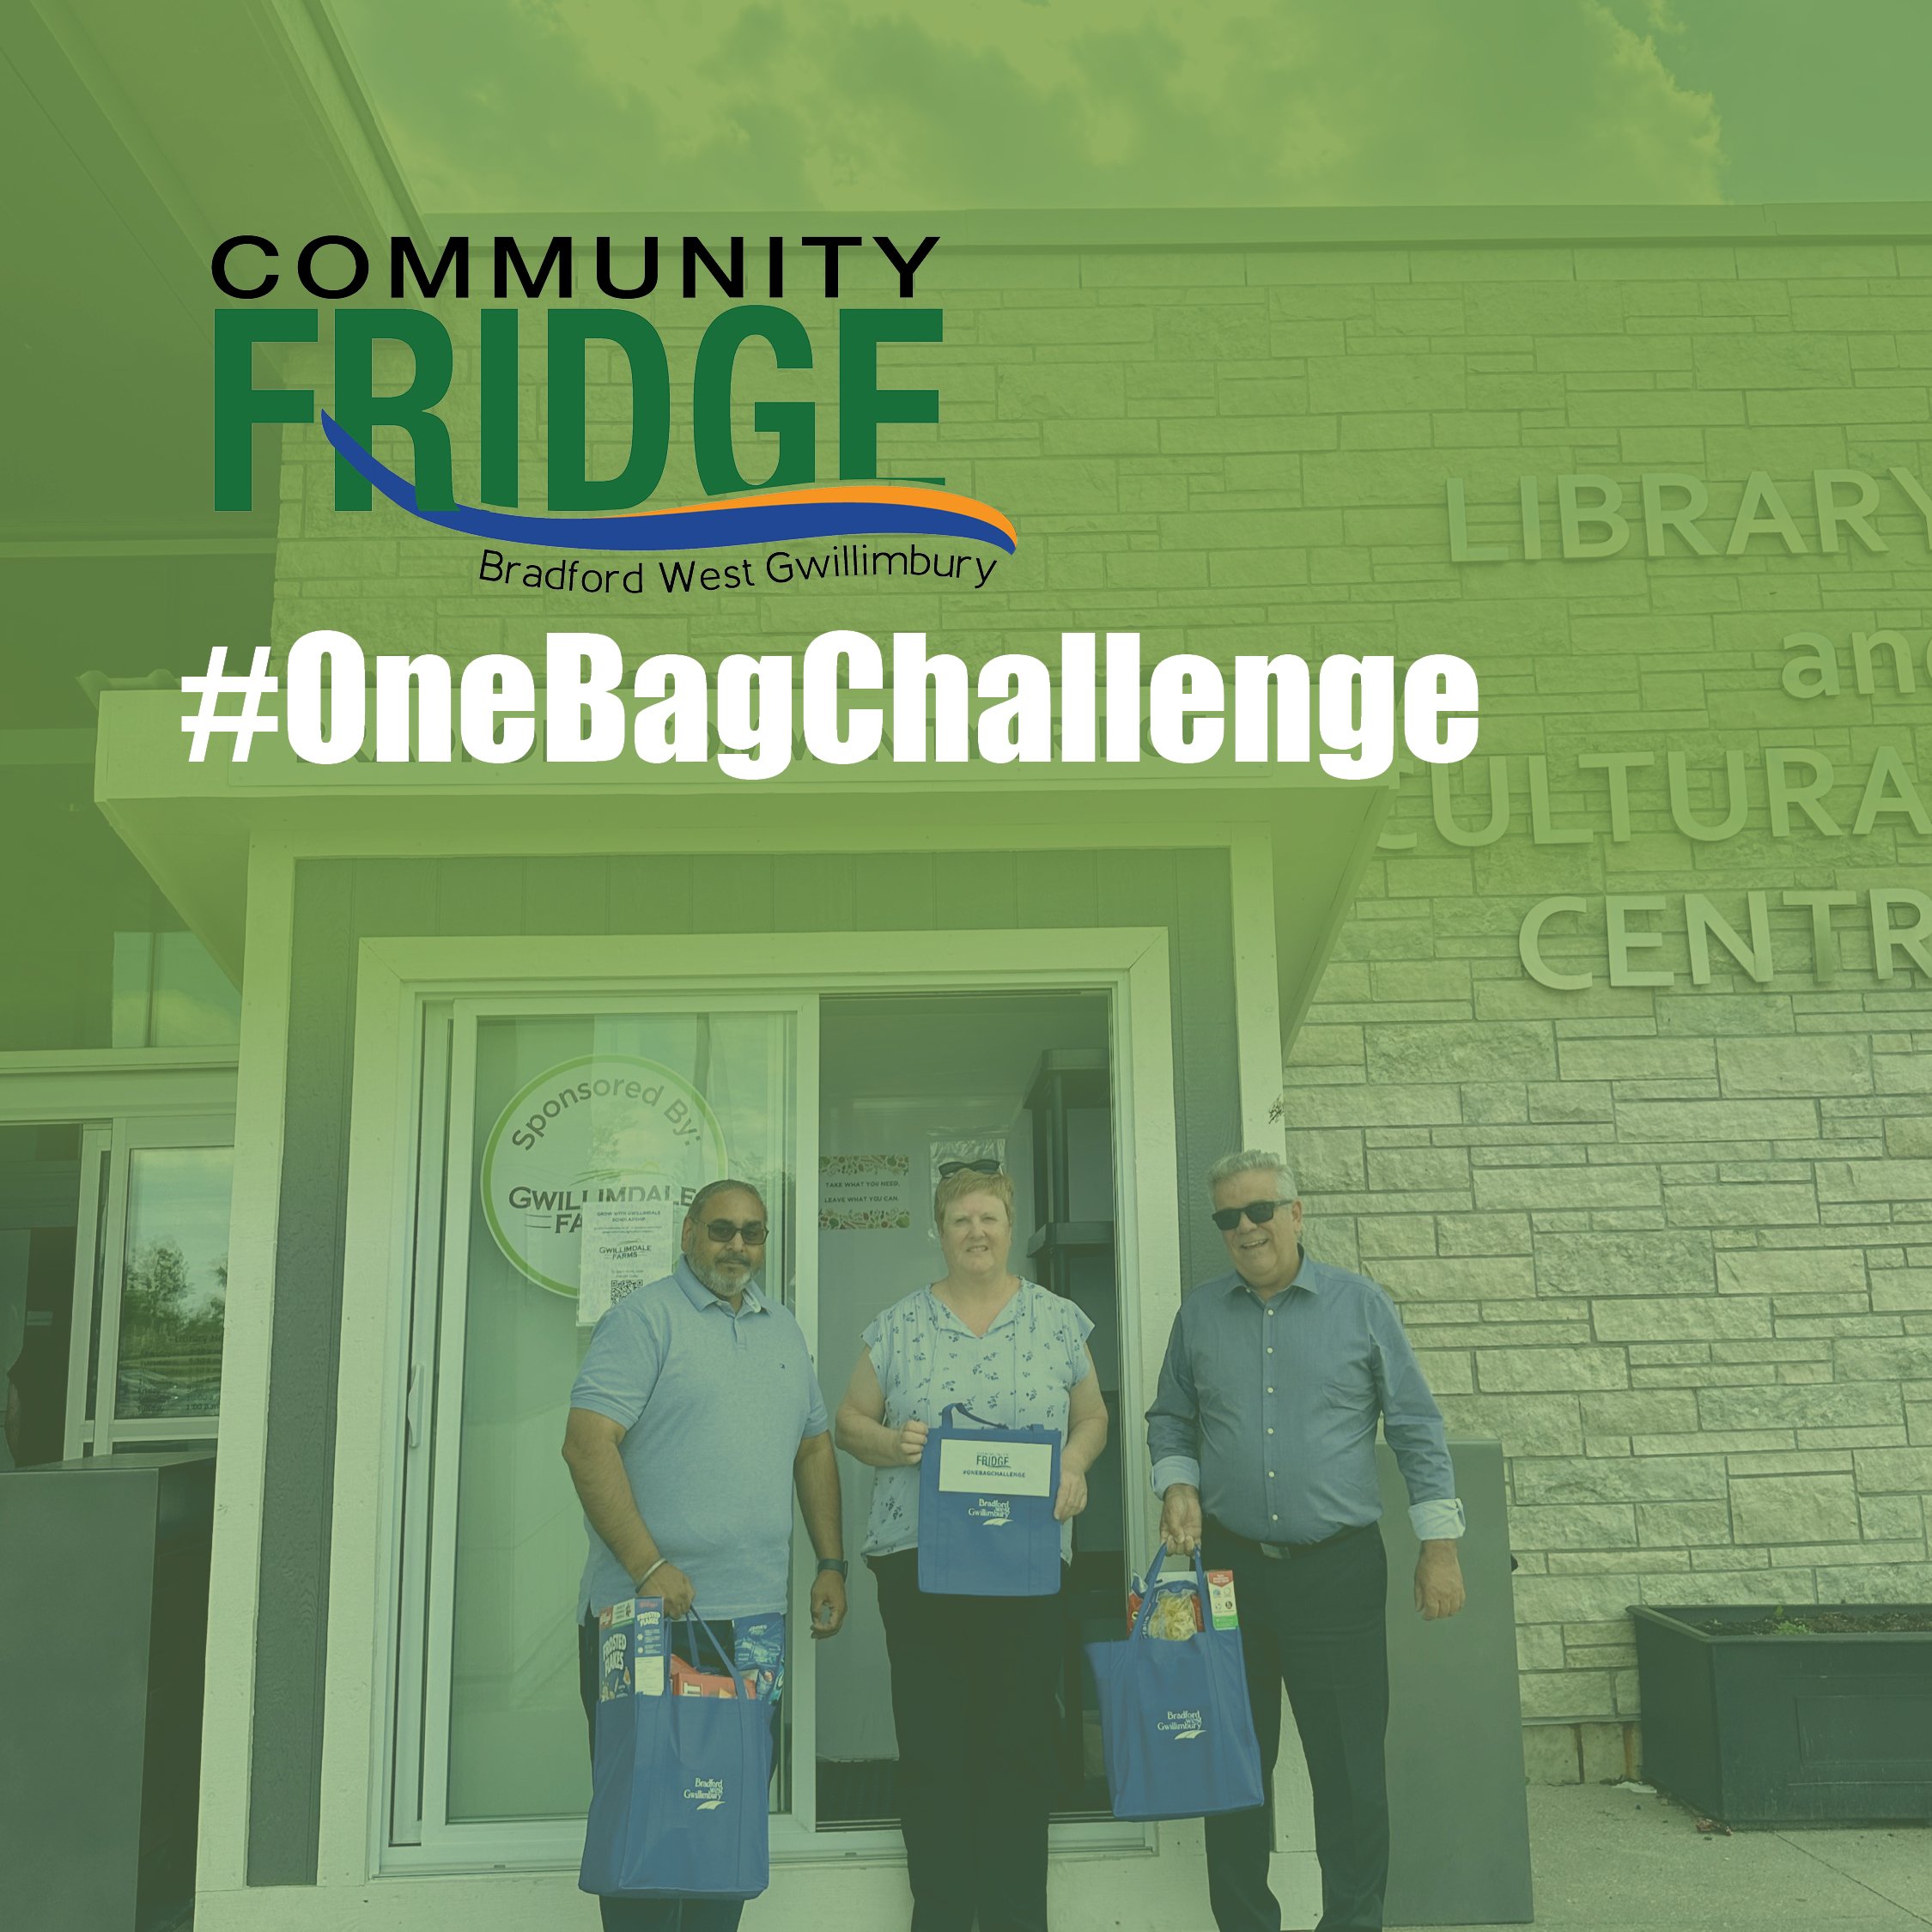 Image of Mayor Leduc and Deputy Mayor Sandhu with community volunteer for the BWG fridge with bags of food outside of the community fridge